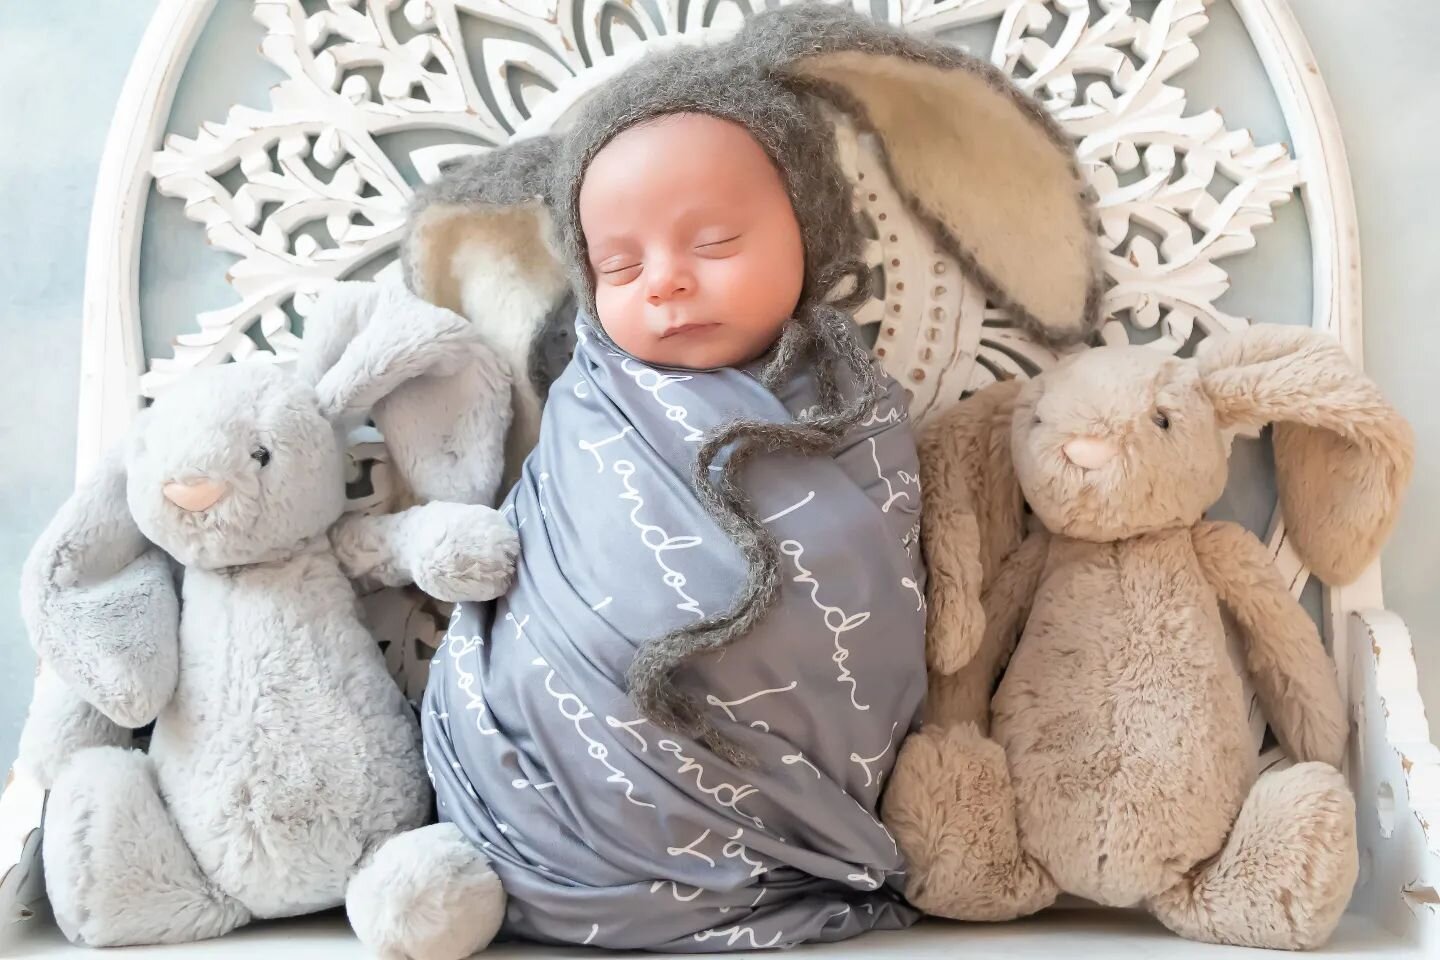 Must be bunny season with all this cuteness!! 🐇💙🥕 @shainyhamo 
.
. #newbornphotography  #newbeginnings #newborn #babyboy